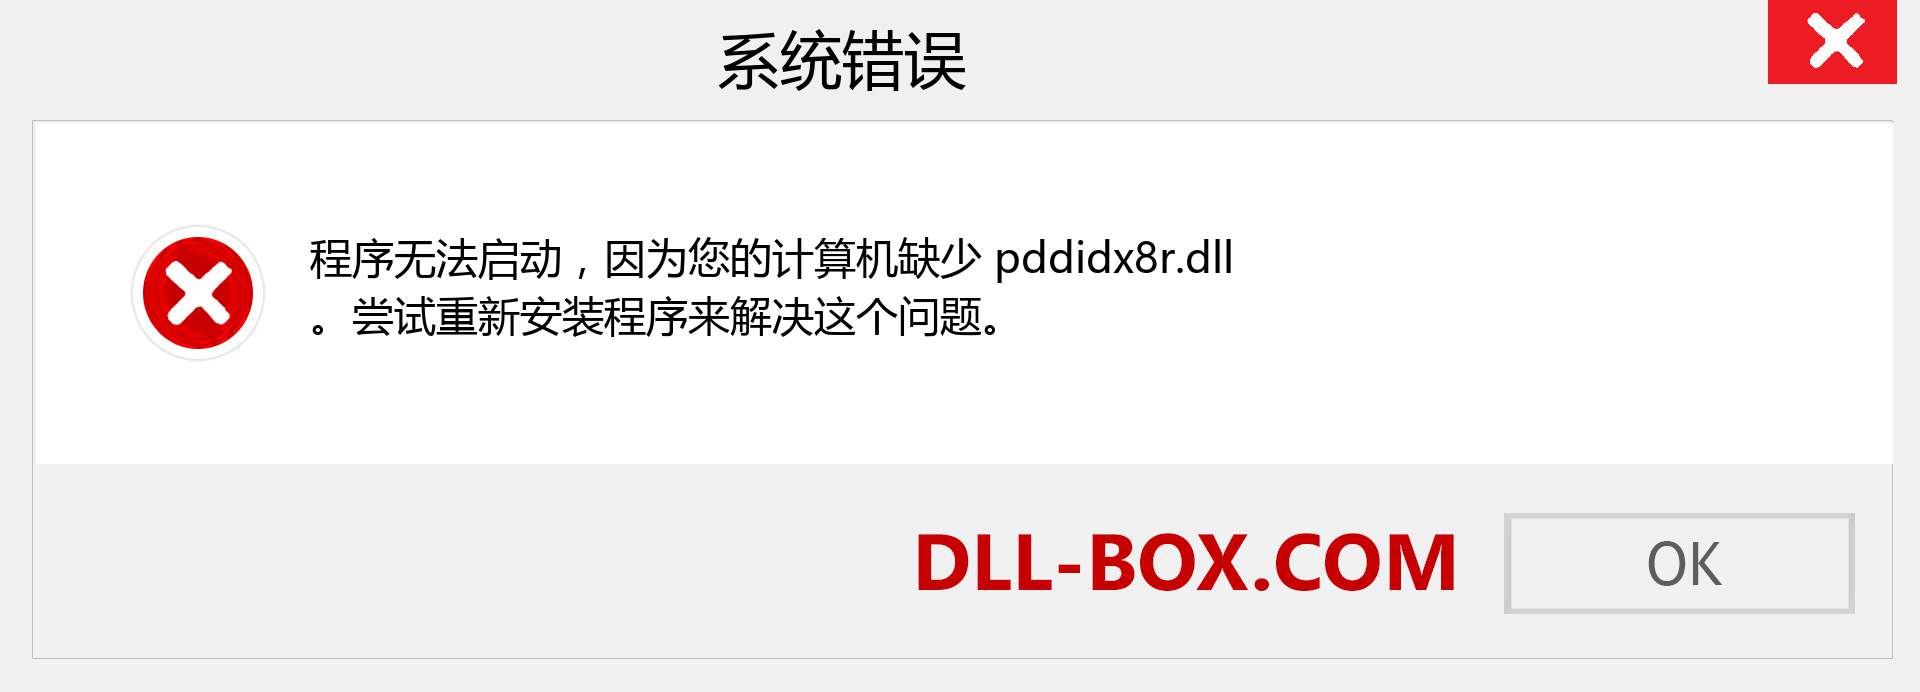 pddidx8r.dll 文件丢失？。 适用于 Windows 7、8、10 的下载 - 修复 Windows、照片、图像上的 pddidx8r dll 丢失错误